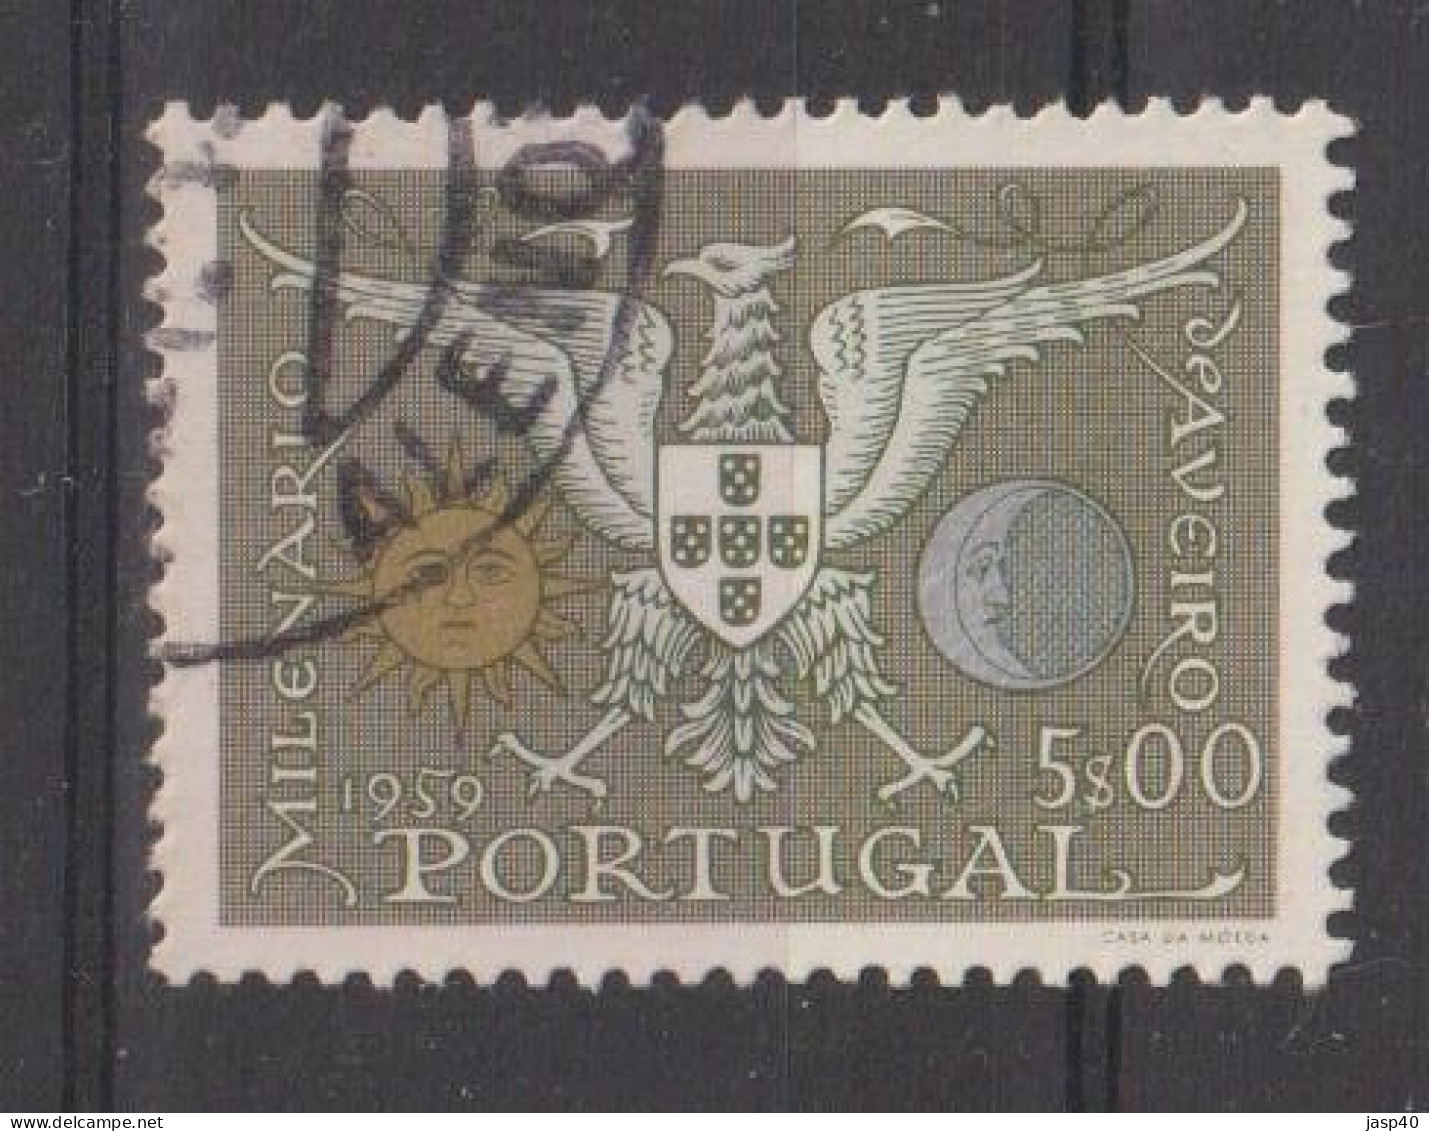 PORTUGAL 848 - POSTMARKS OF PORTUGAL - ALENQUER - Gebruikt